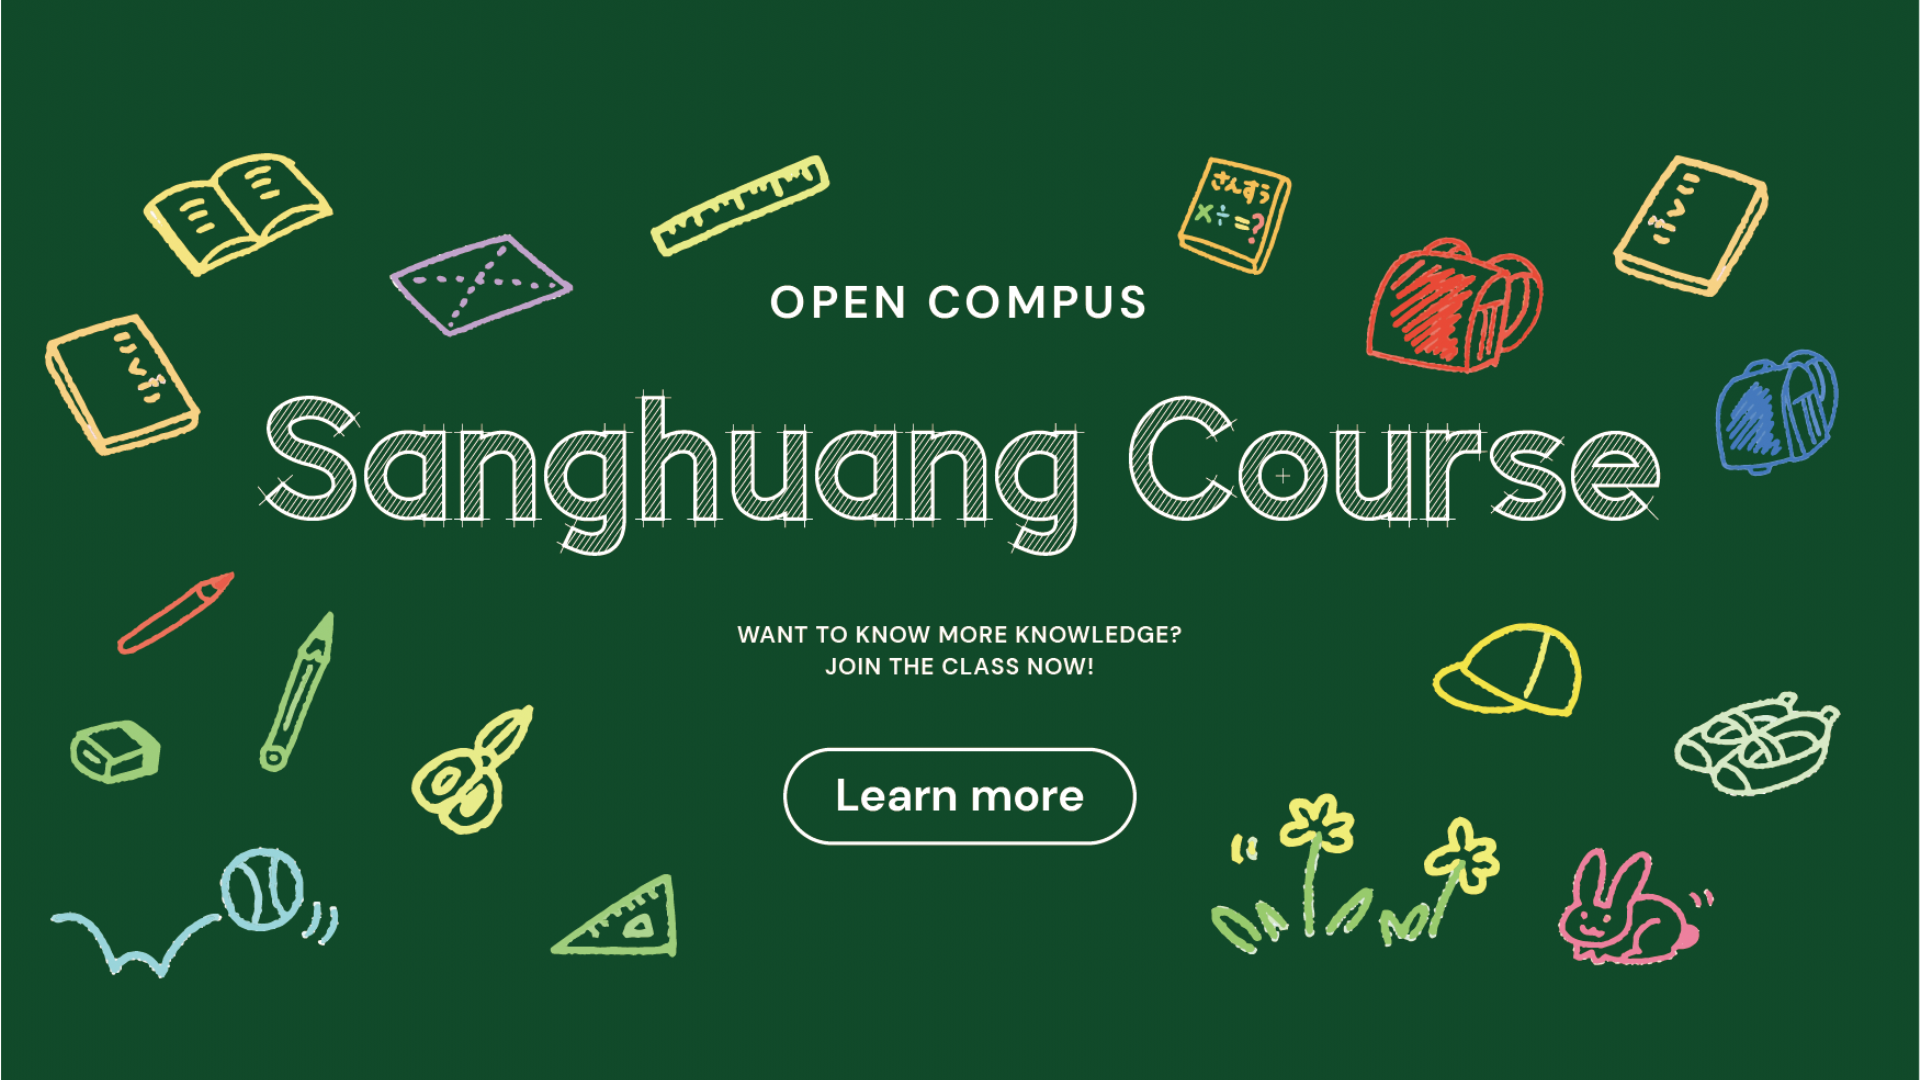 Sanghuang Course